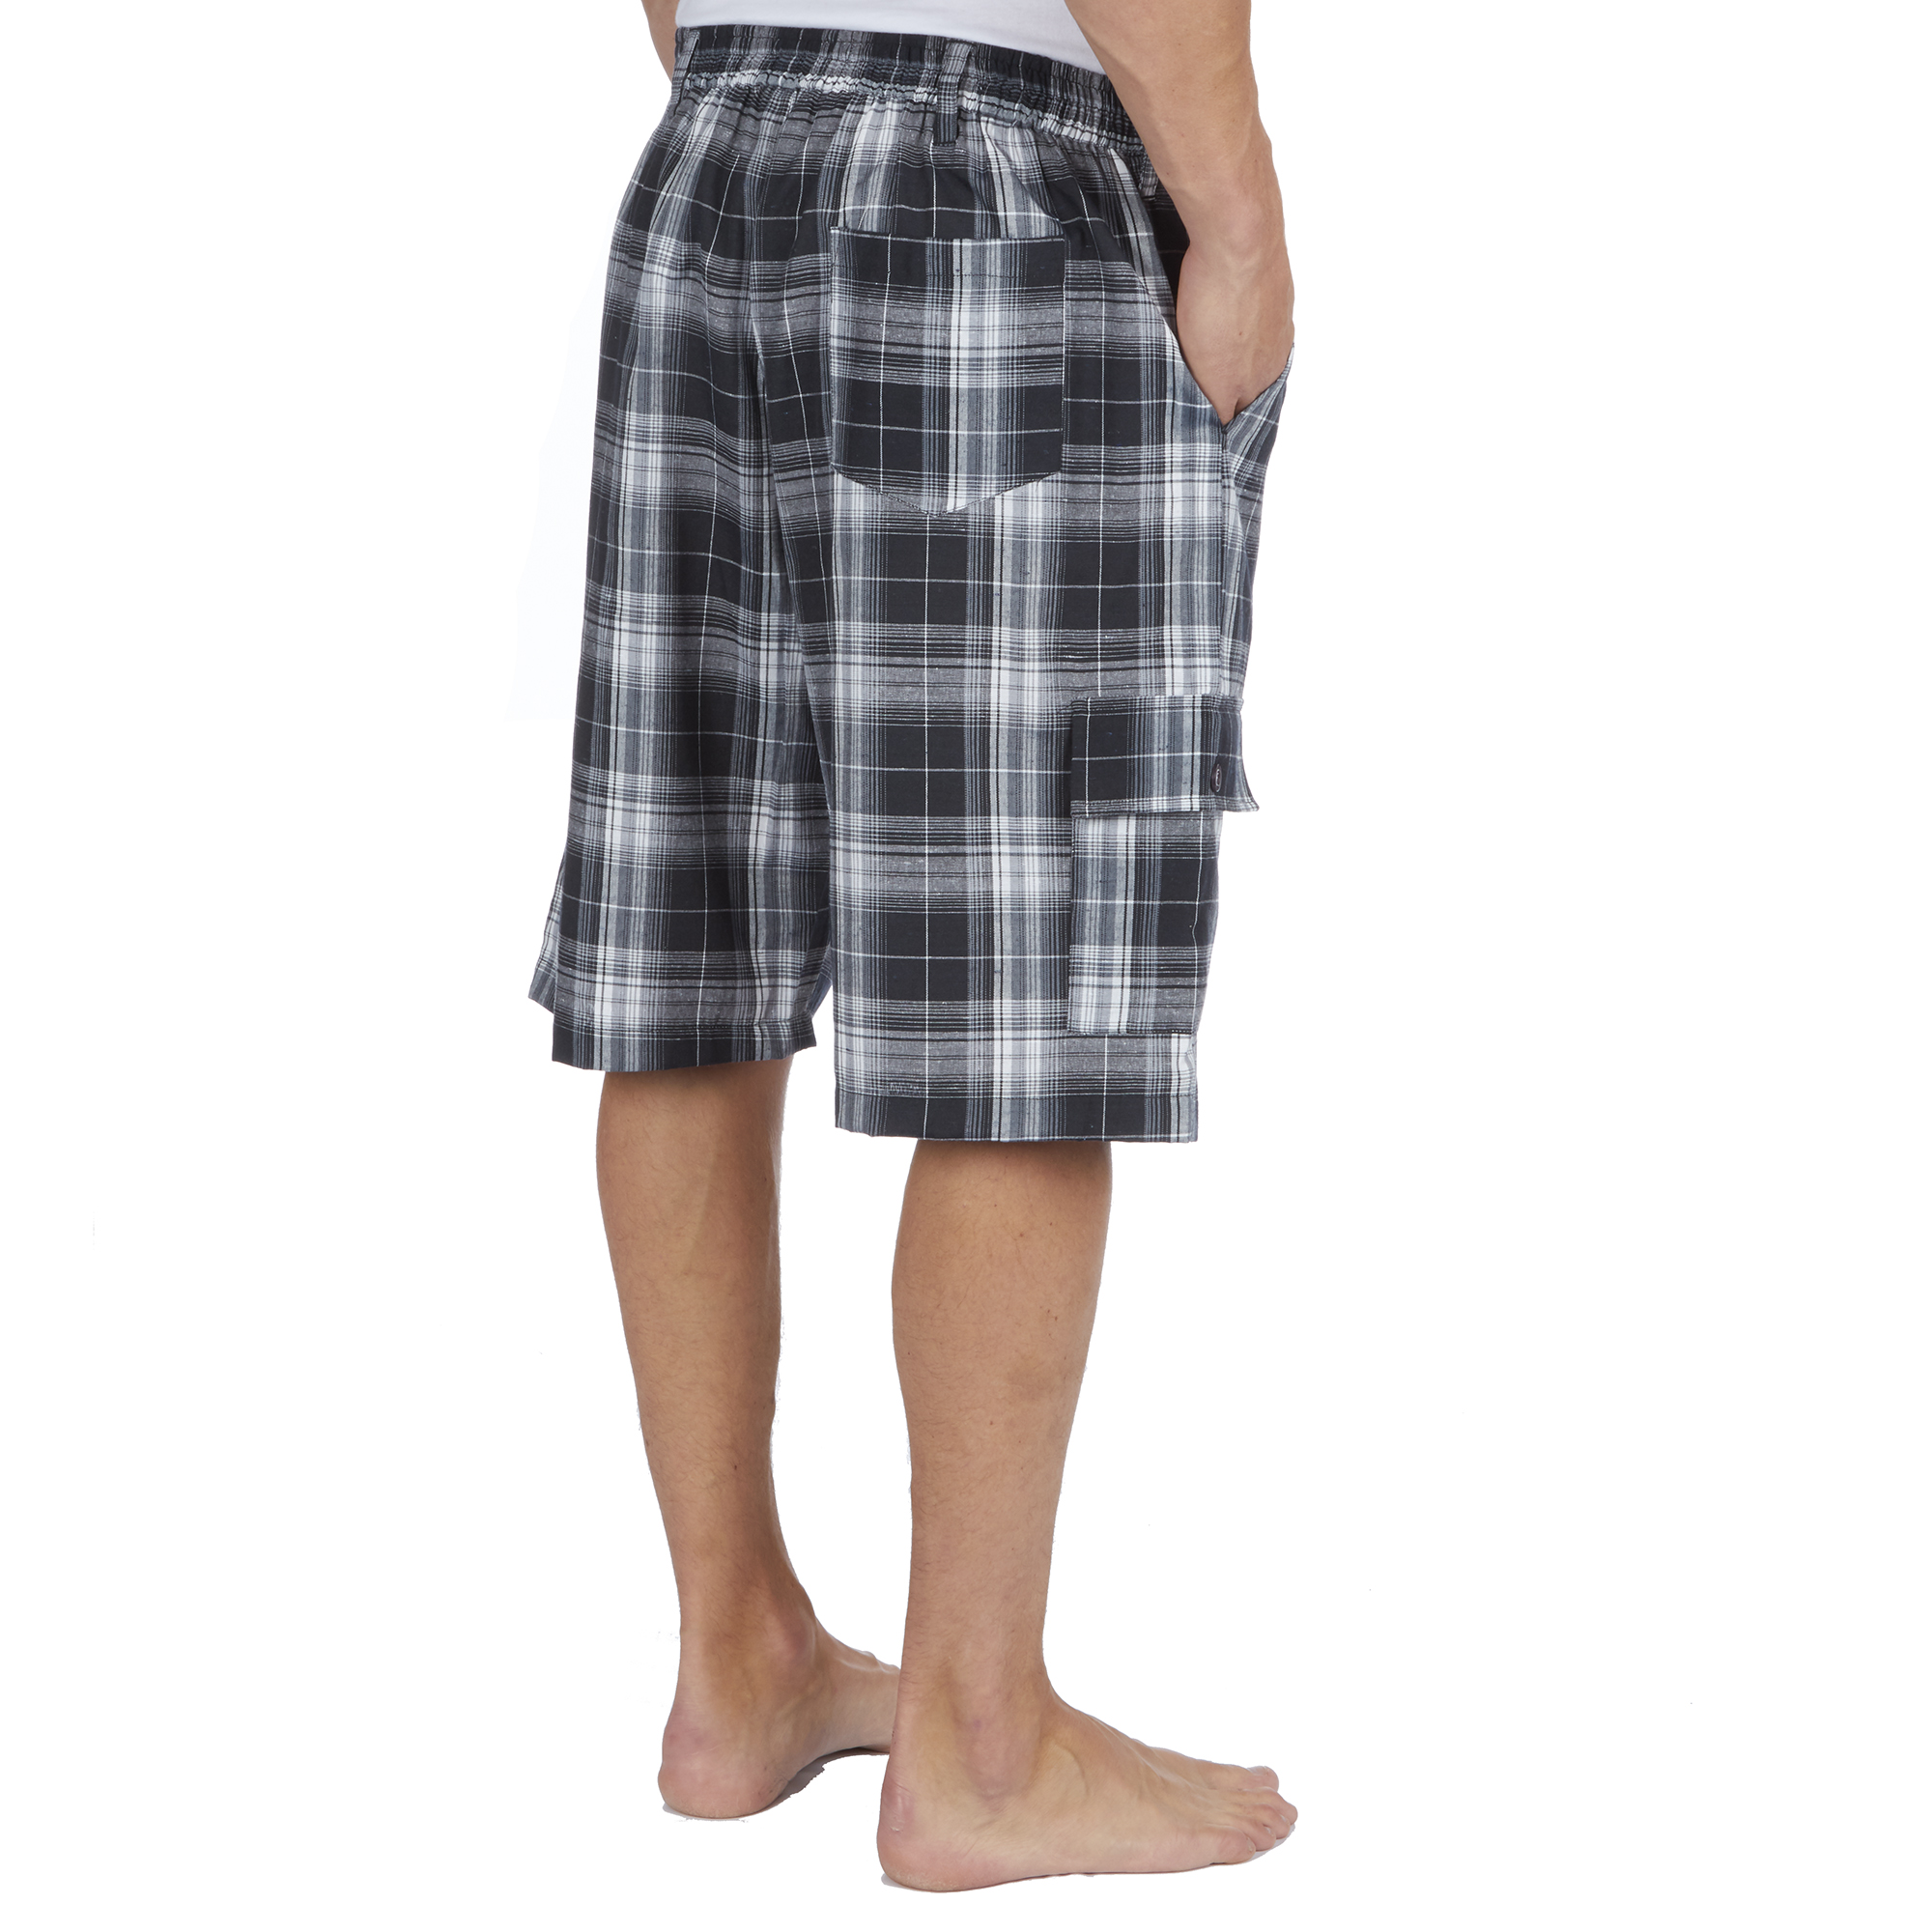 Mens Checked Striped  Woven Shorts Pj Check Nightwear Lounge M-XXL 